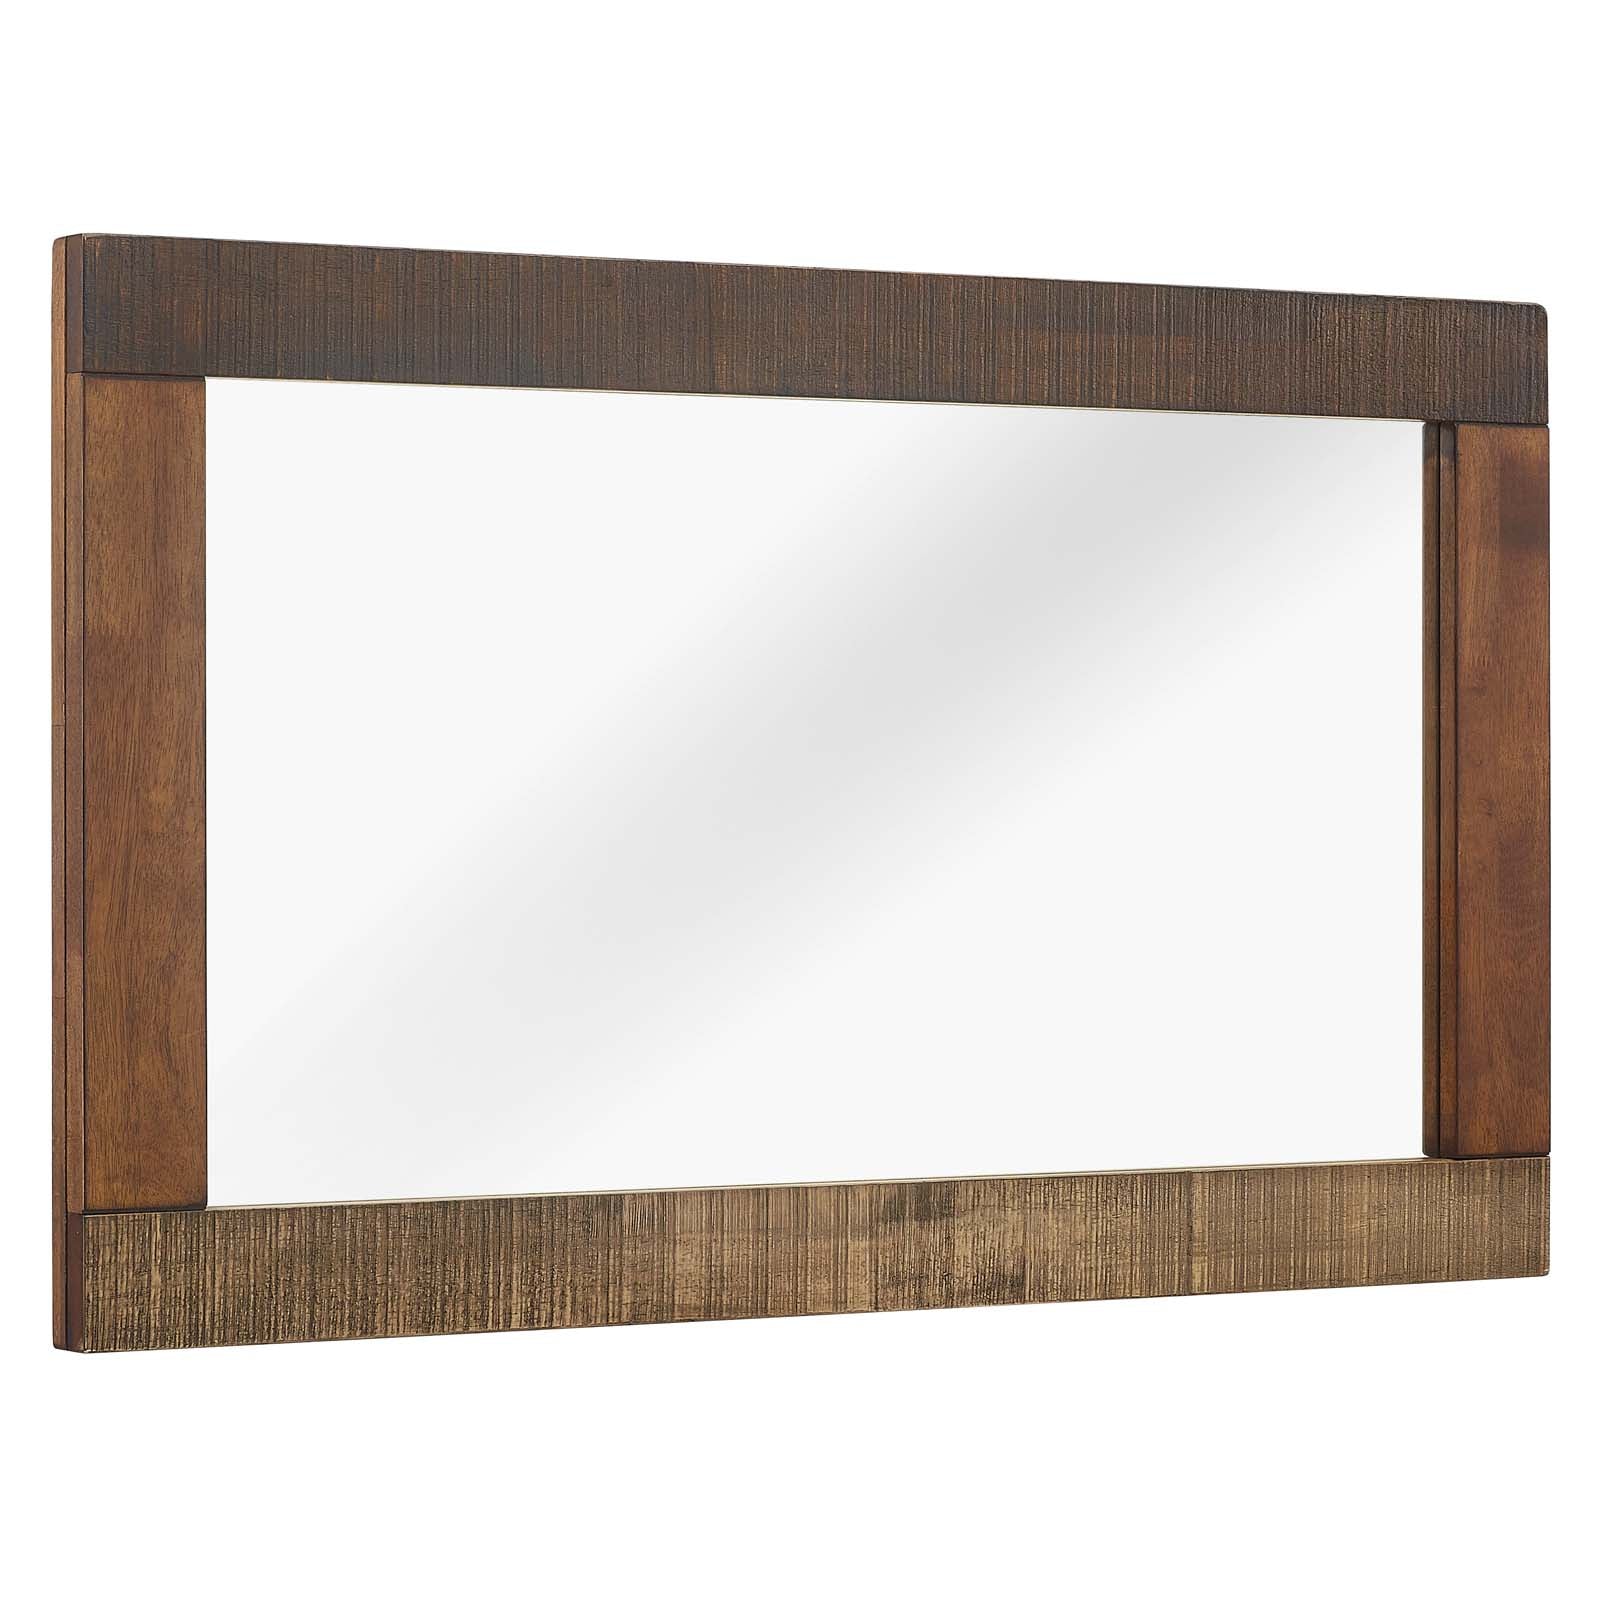 Modway Mirrors - Arwen Rustic Wood Frame Mirror Walnut